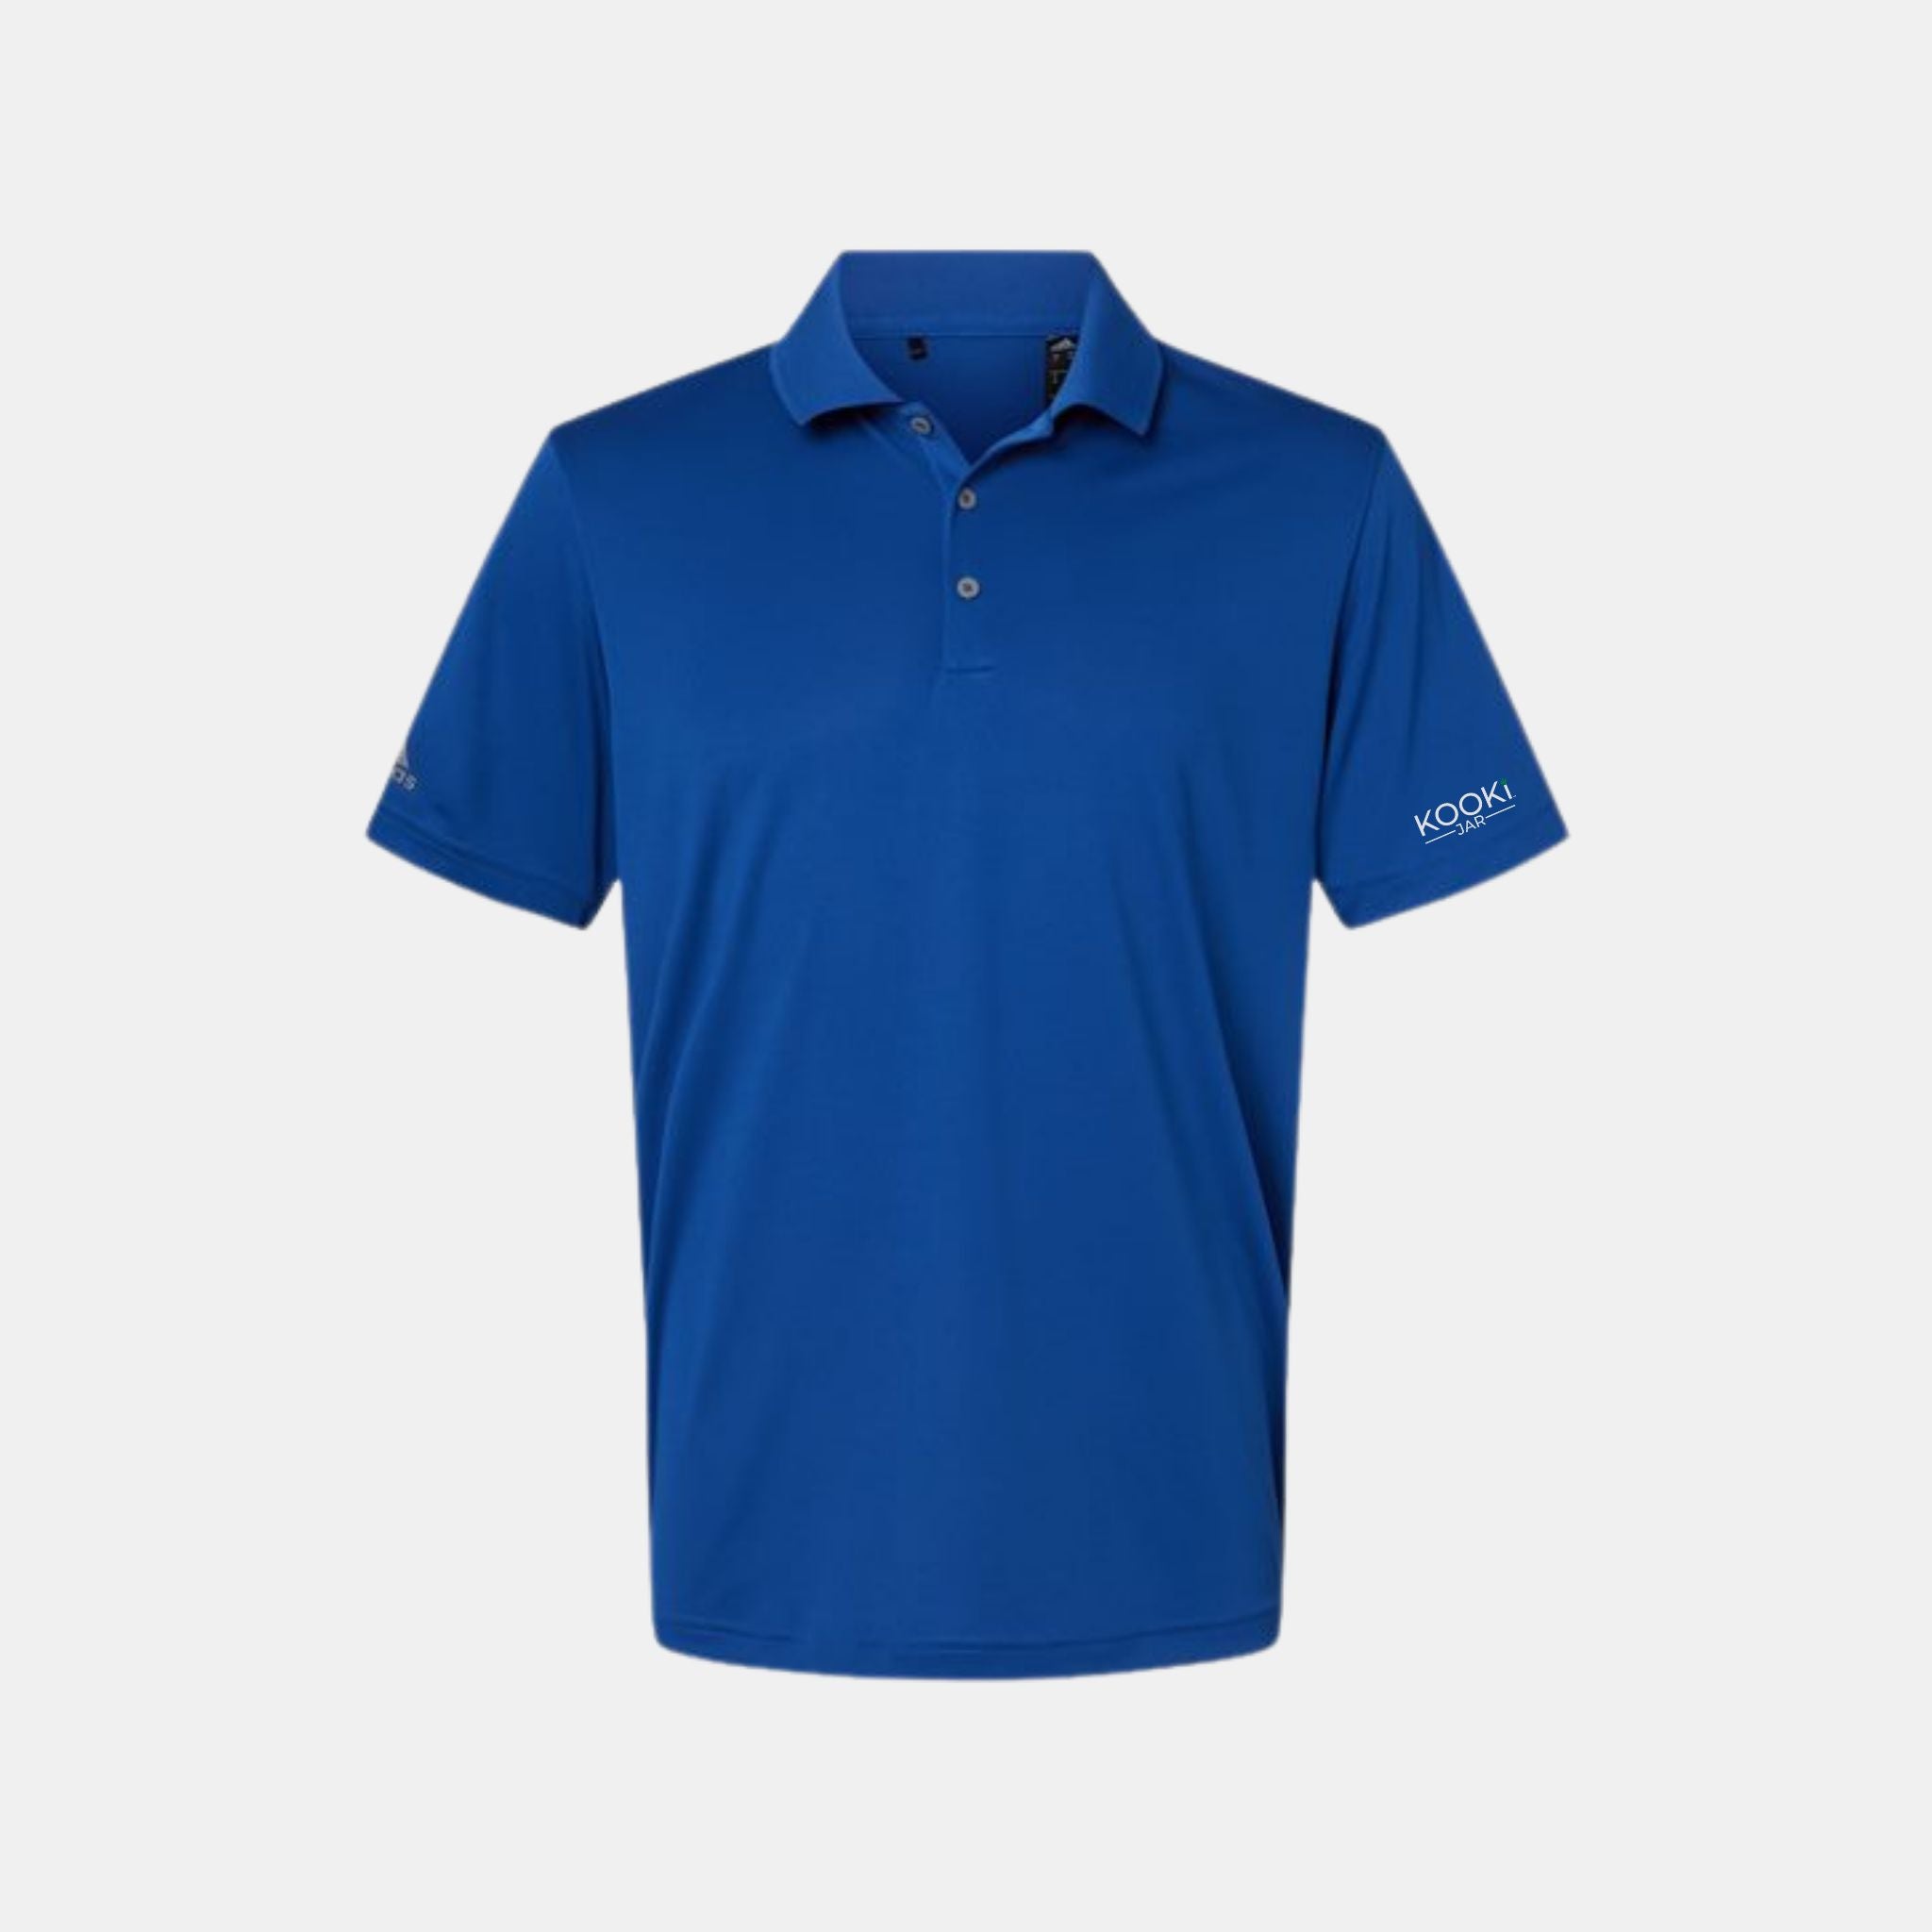 The Golfer | Adidas Polo Golf Shirt Blue Front